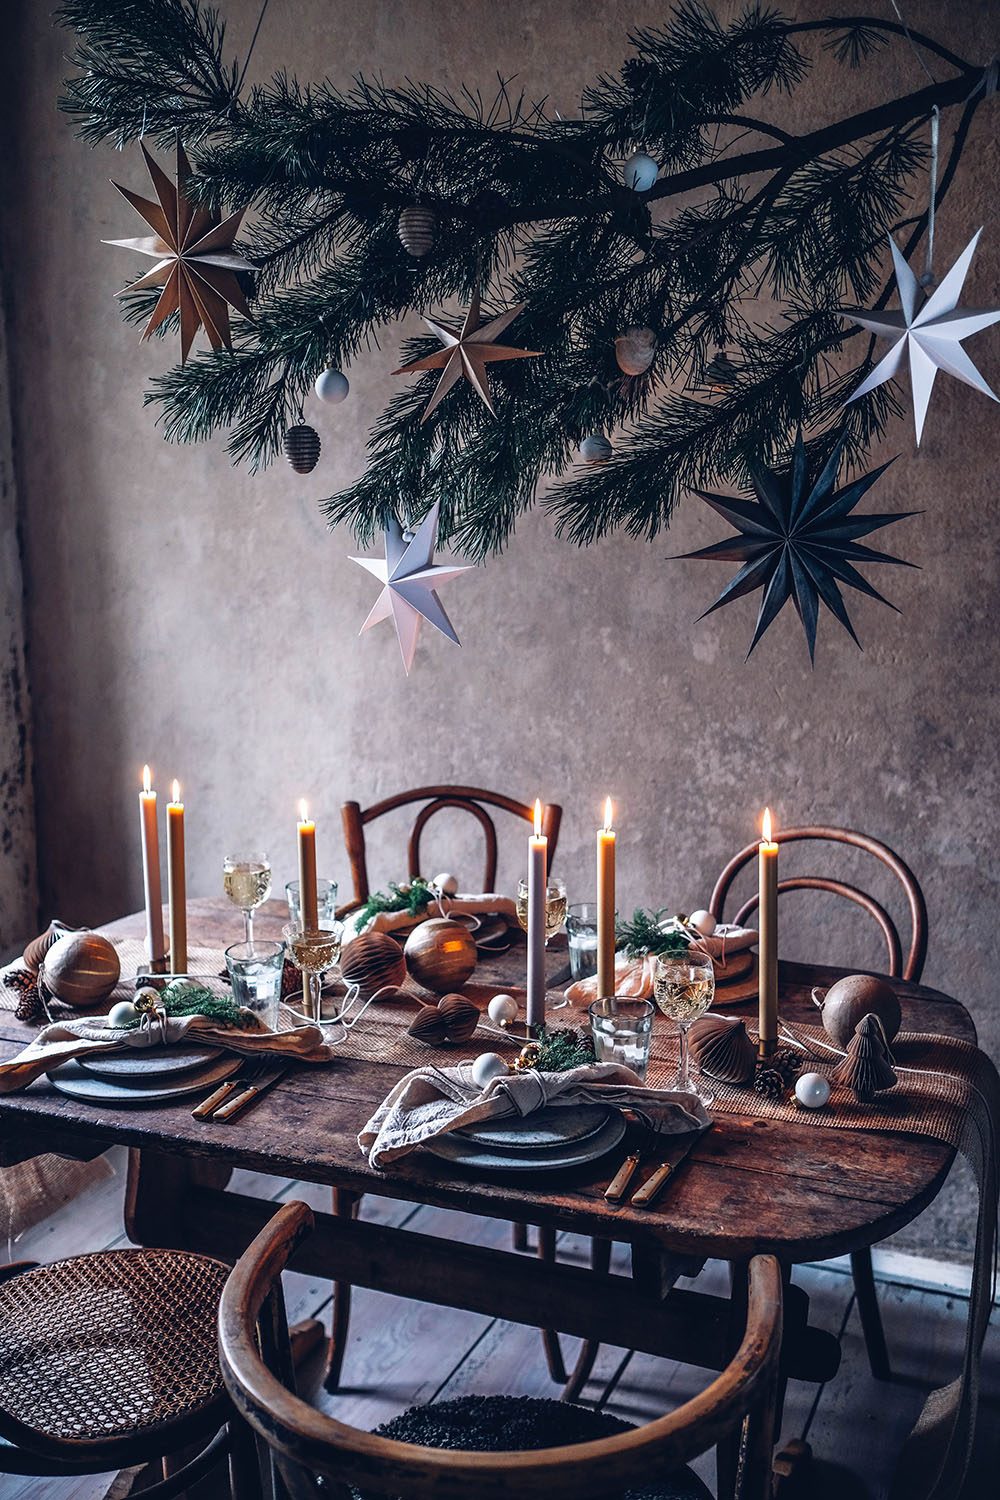 A Simple Christmas Table Setting